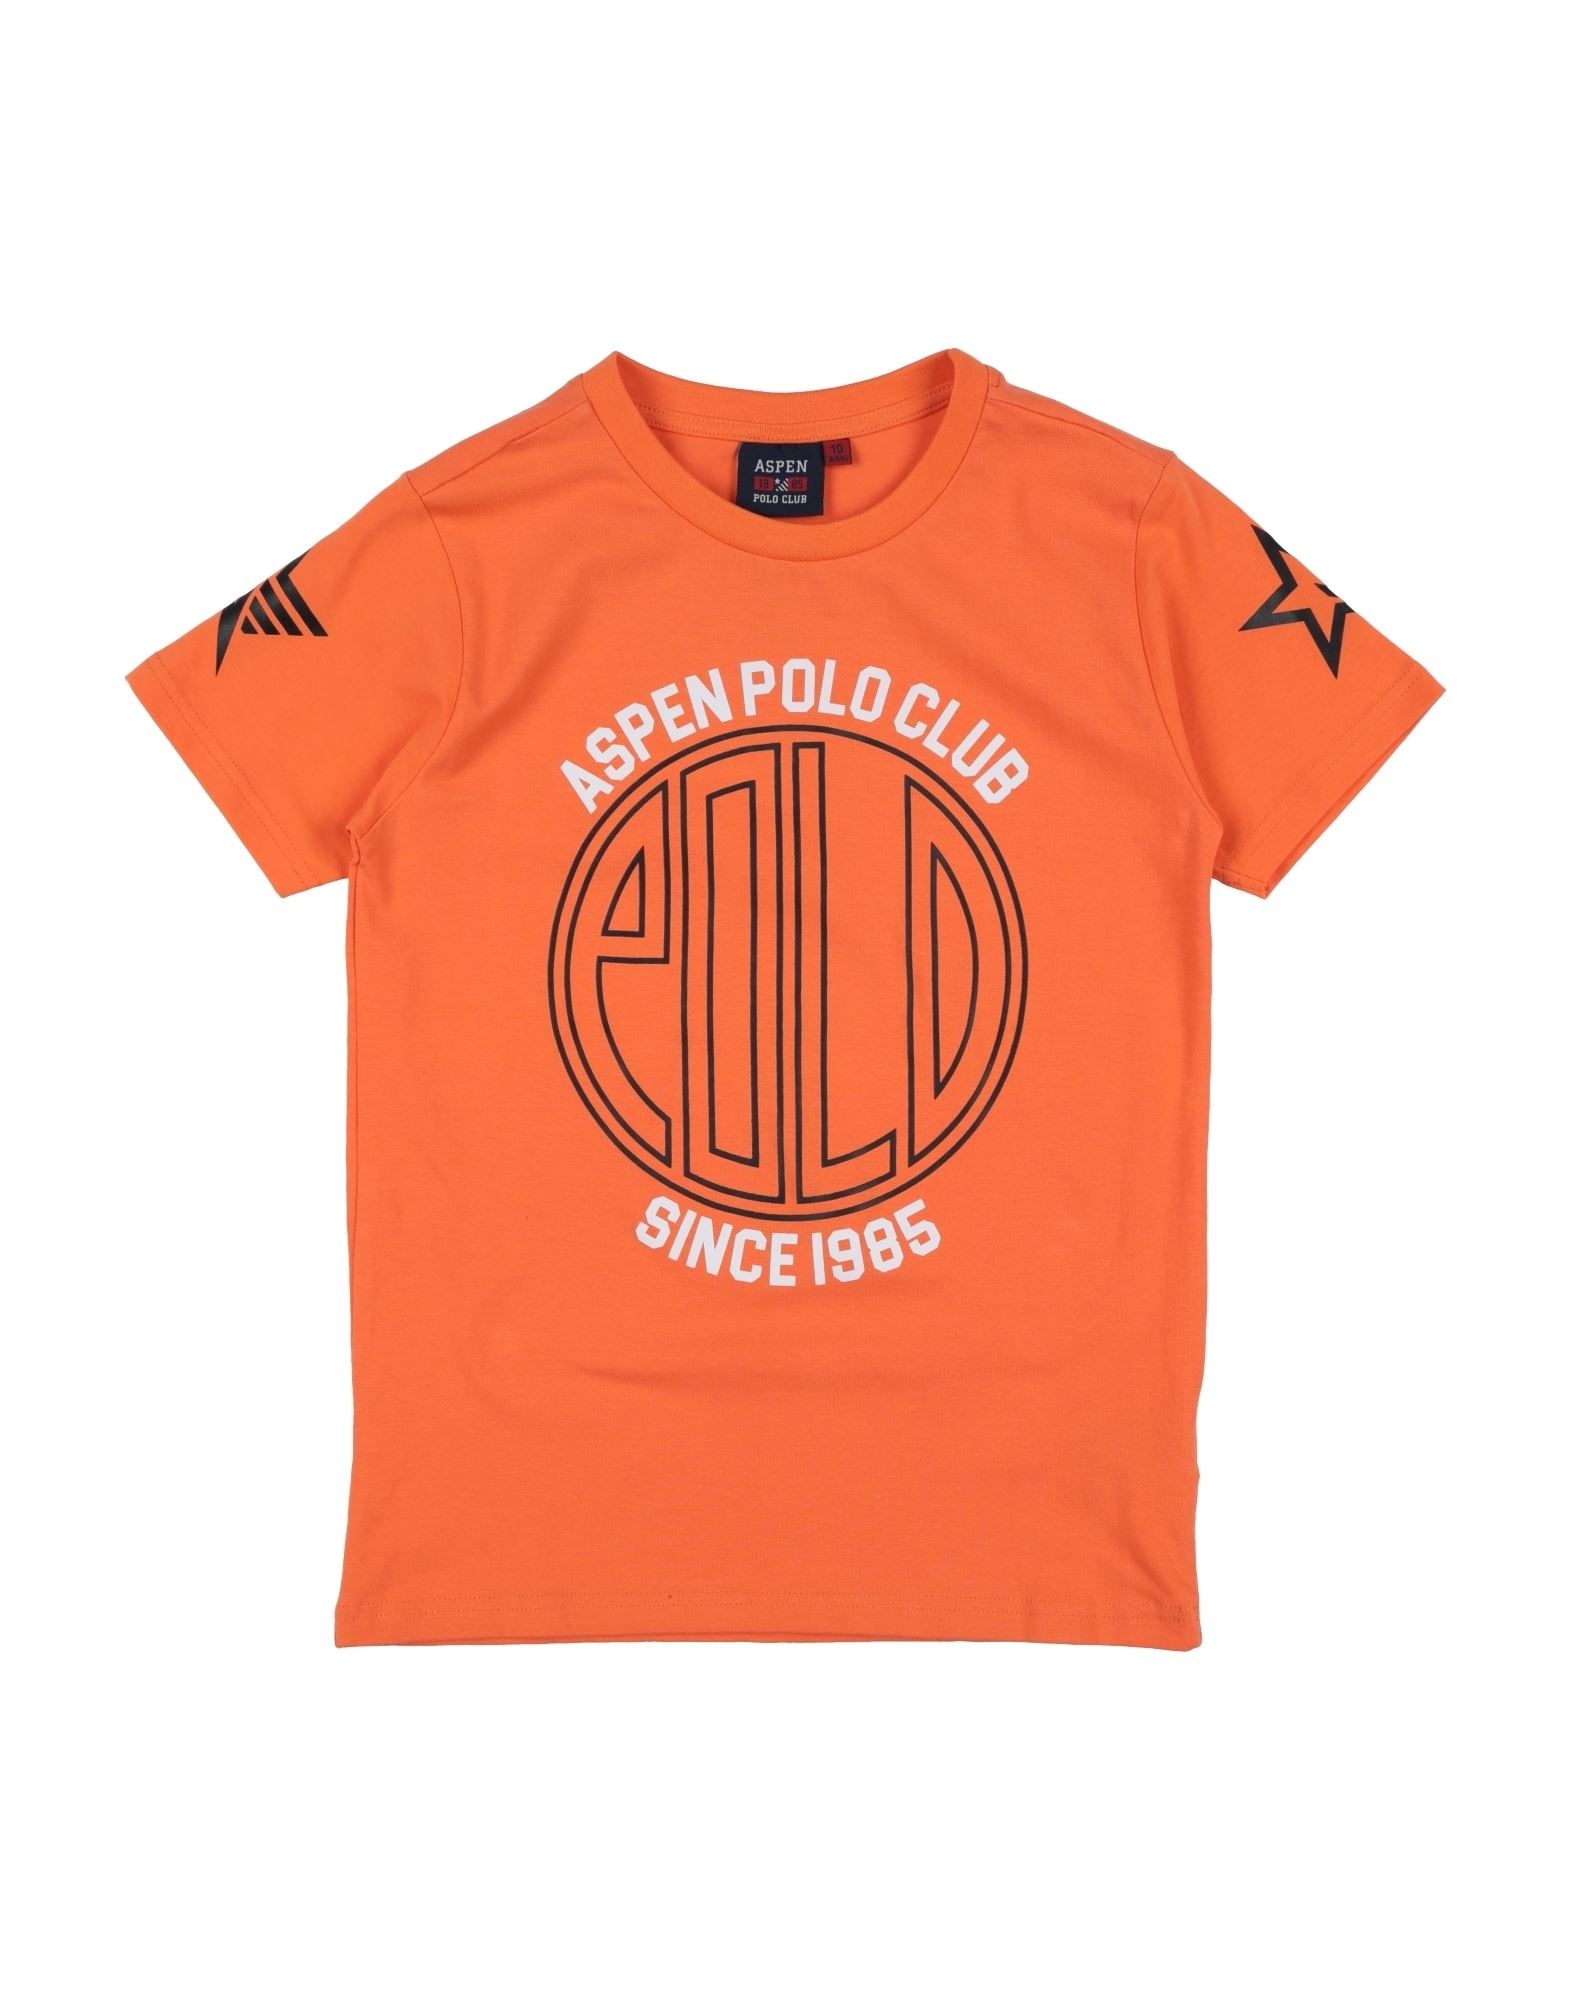 Aspen Polo Club Kids'  T-shirts In Orange